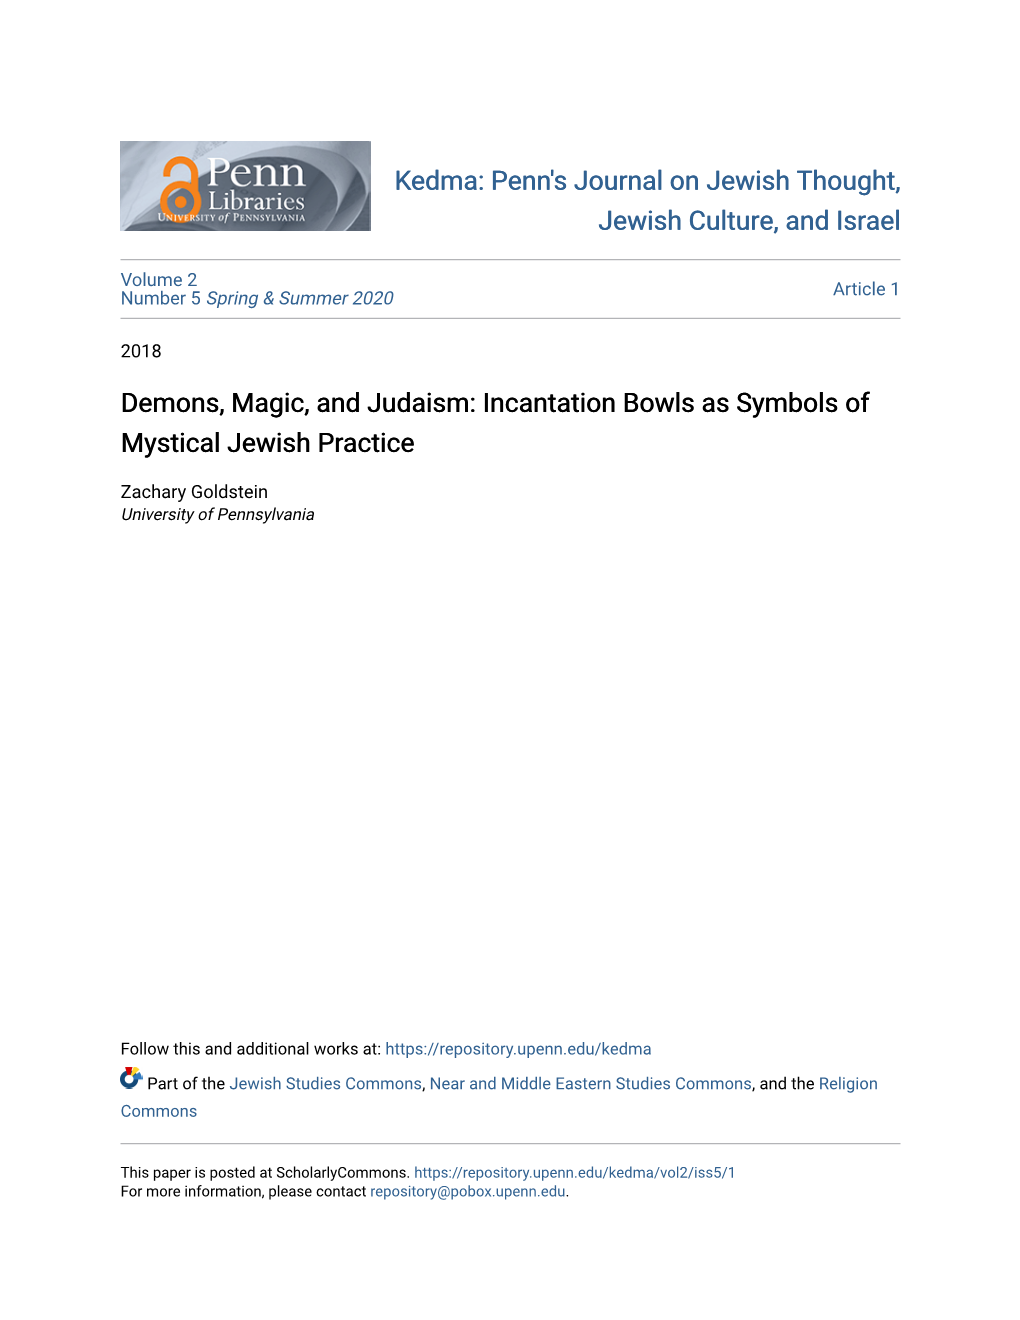 Demons, Magic, and Judaism: Incantation Bowls As Symbols of Mystical Jewish Practice